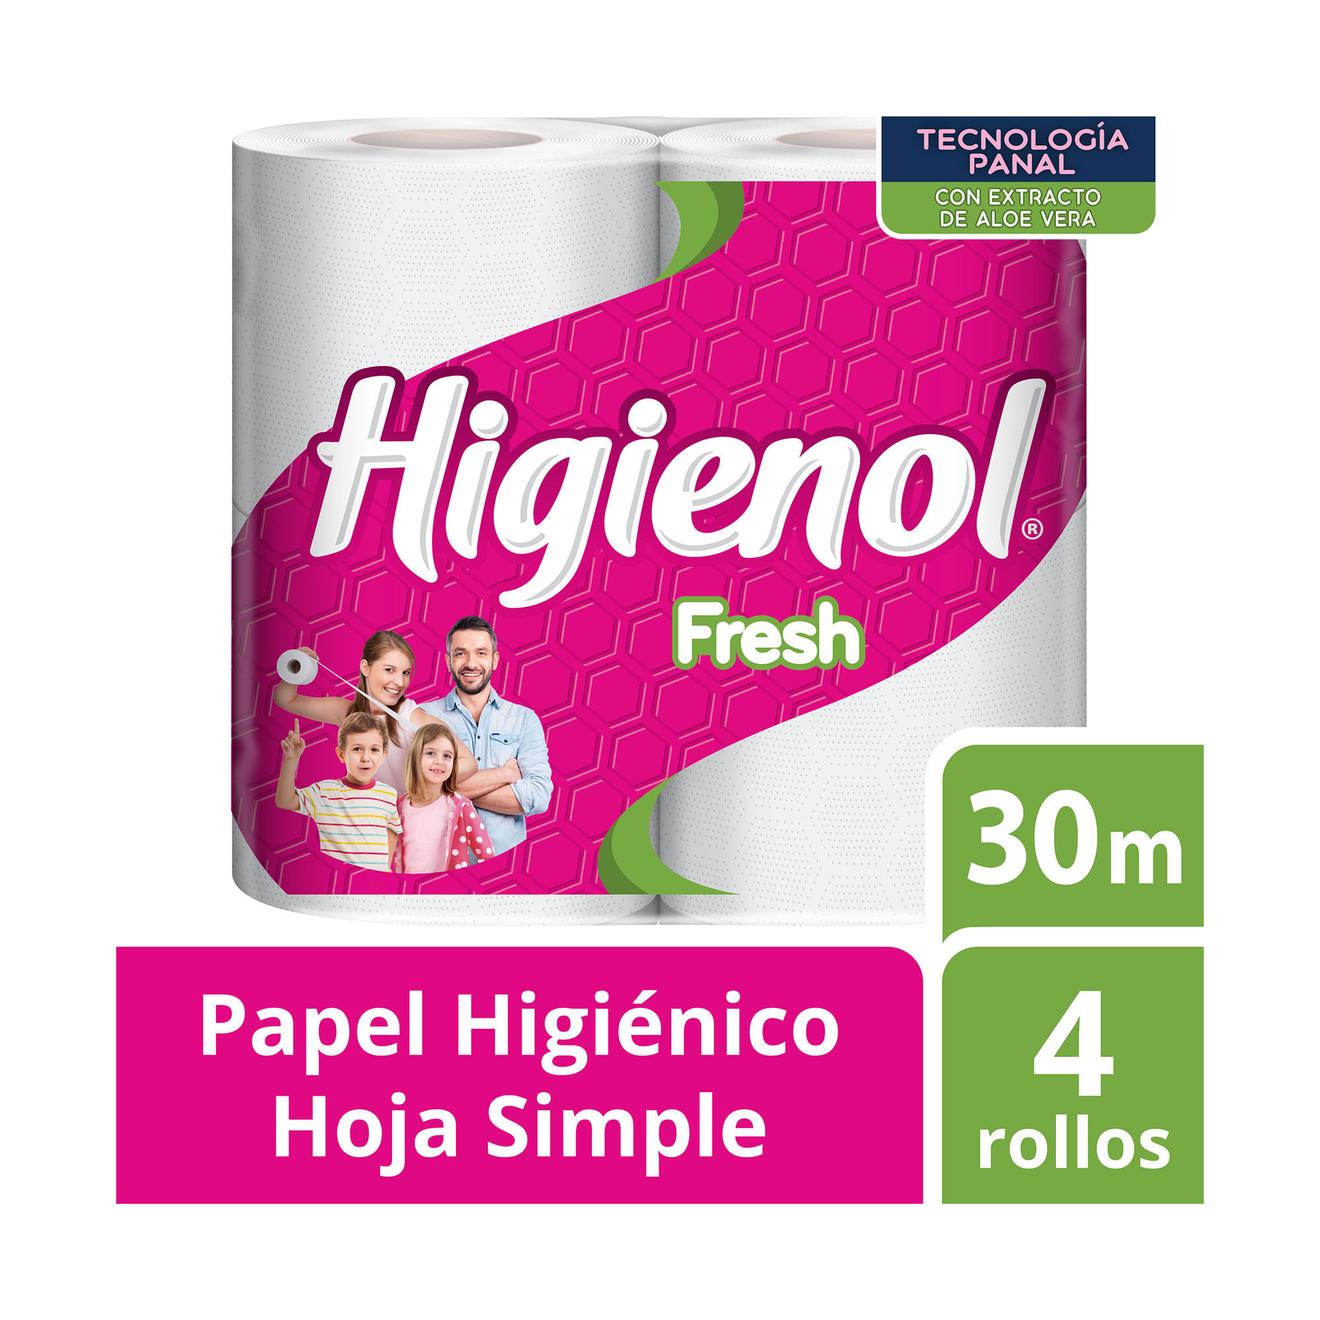 Oferta de Papel higiénico Higienol hoja simple fresh aloe x4 30 mts. por $1850 en Carrefour